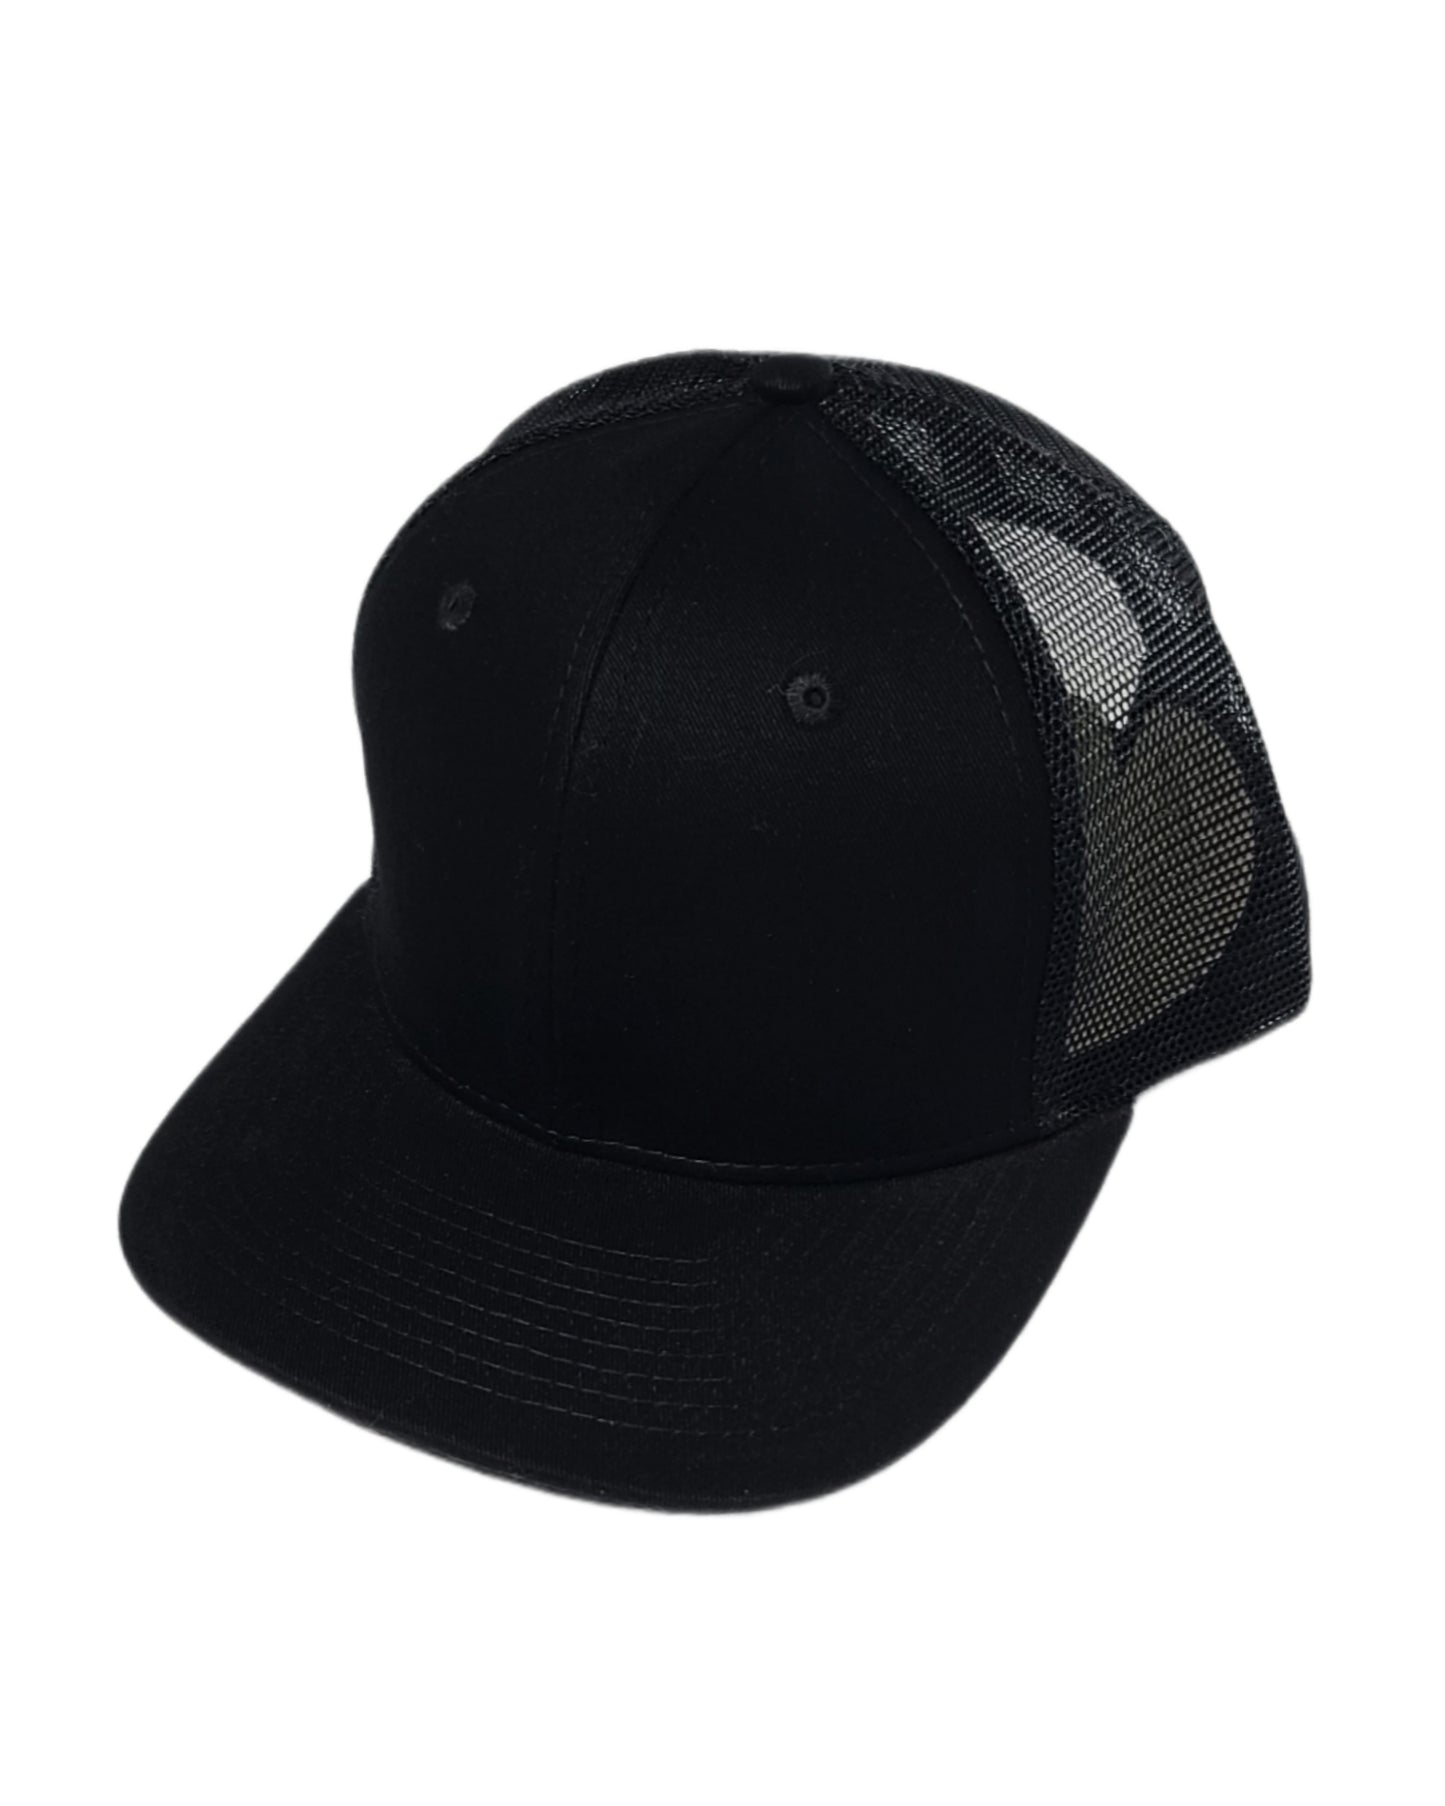 black mesh blank hat caps Calitrendz